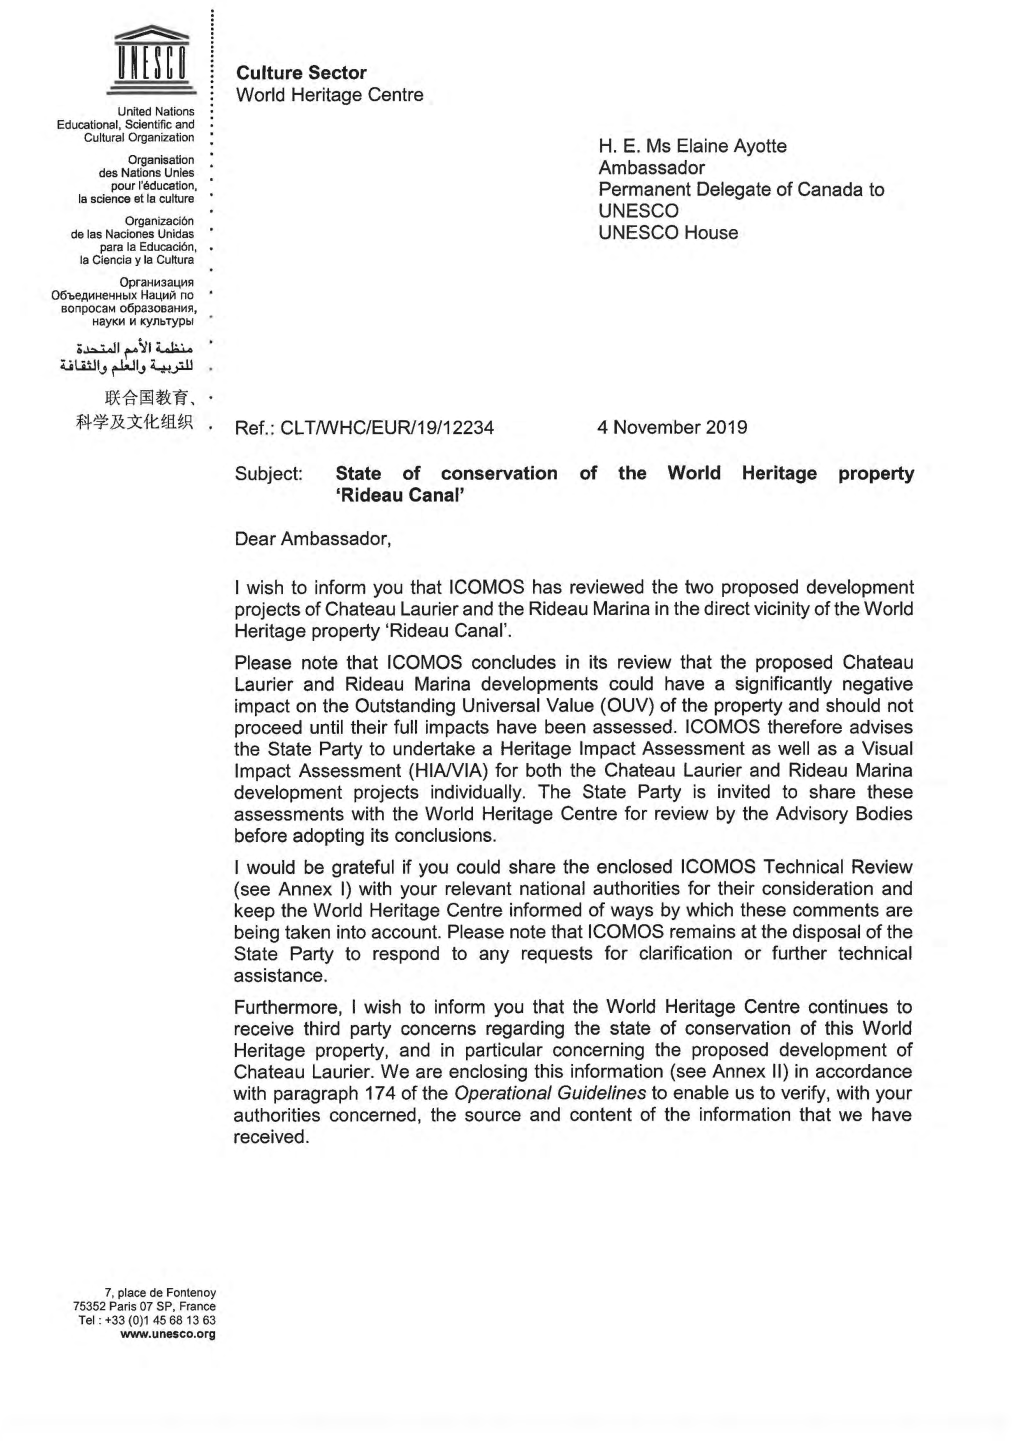 UNESCO-Letter-Of-Concern-2019-11-04.Pdf